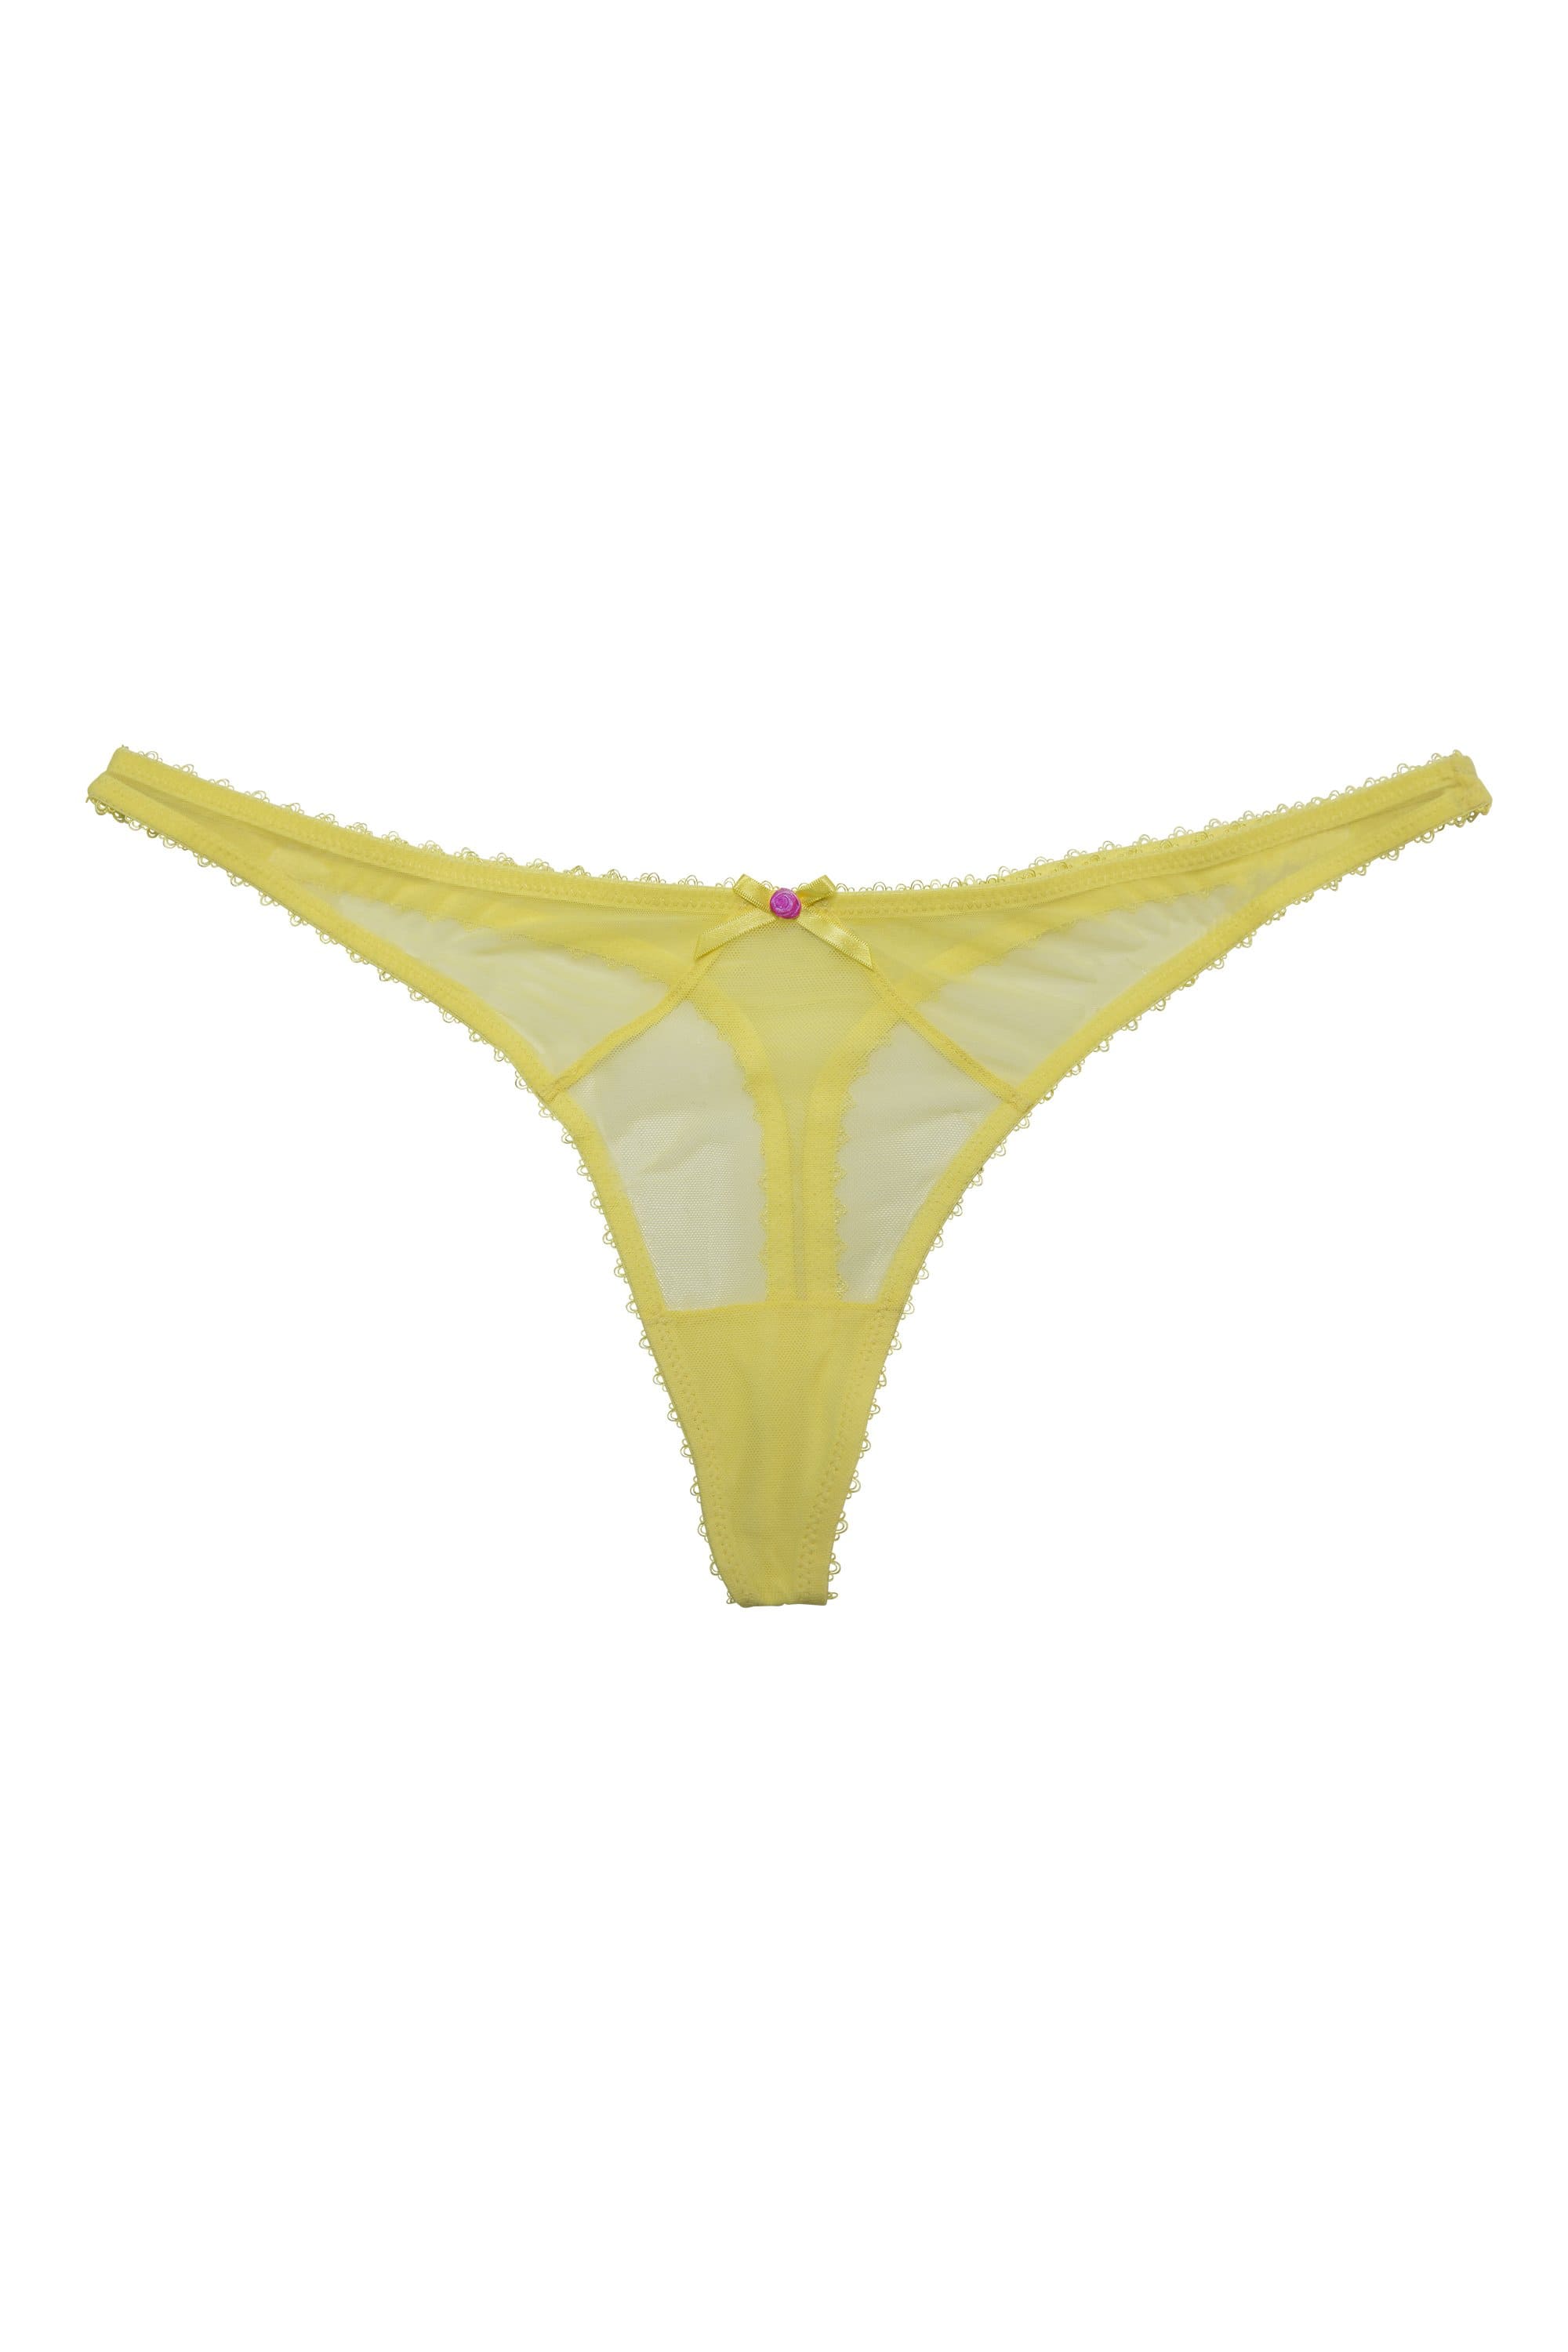 VEGEMITE Thongs, Yellow Strap - Womens - Tastes Like Australia